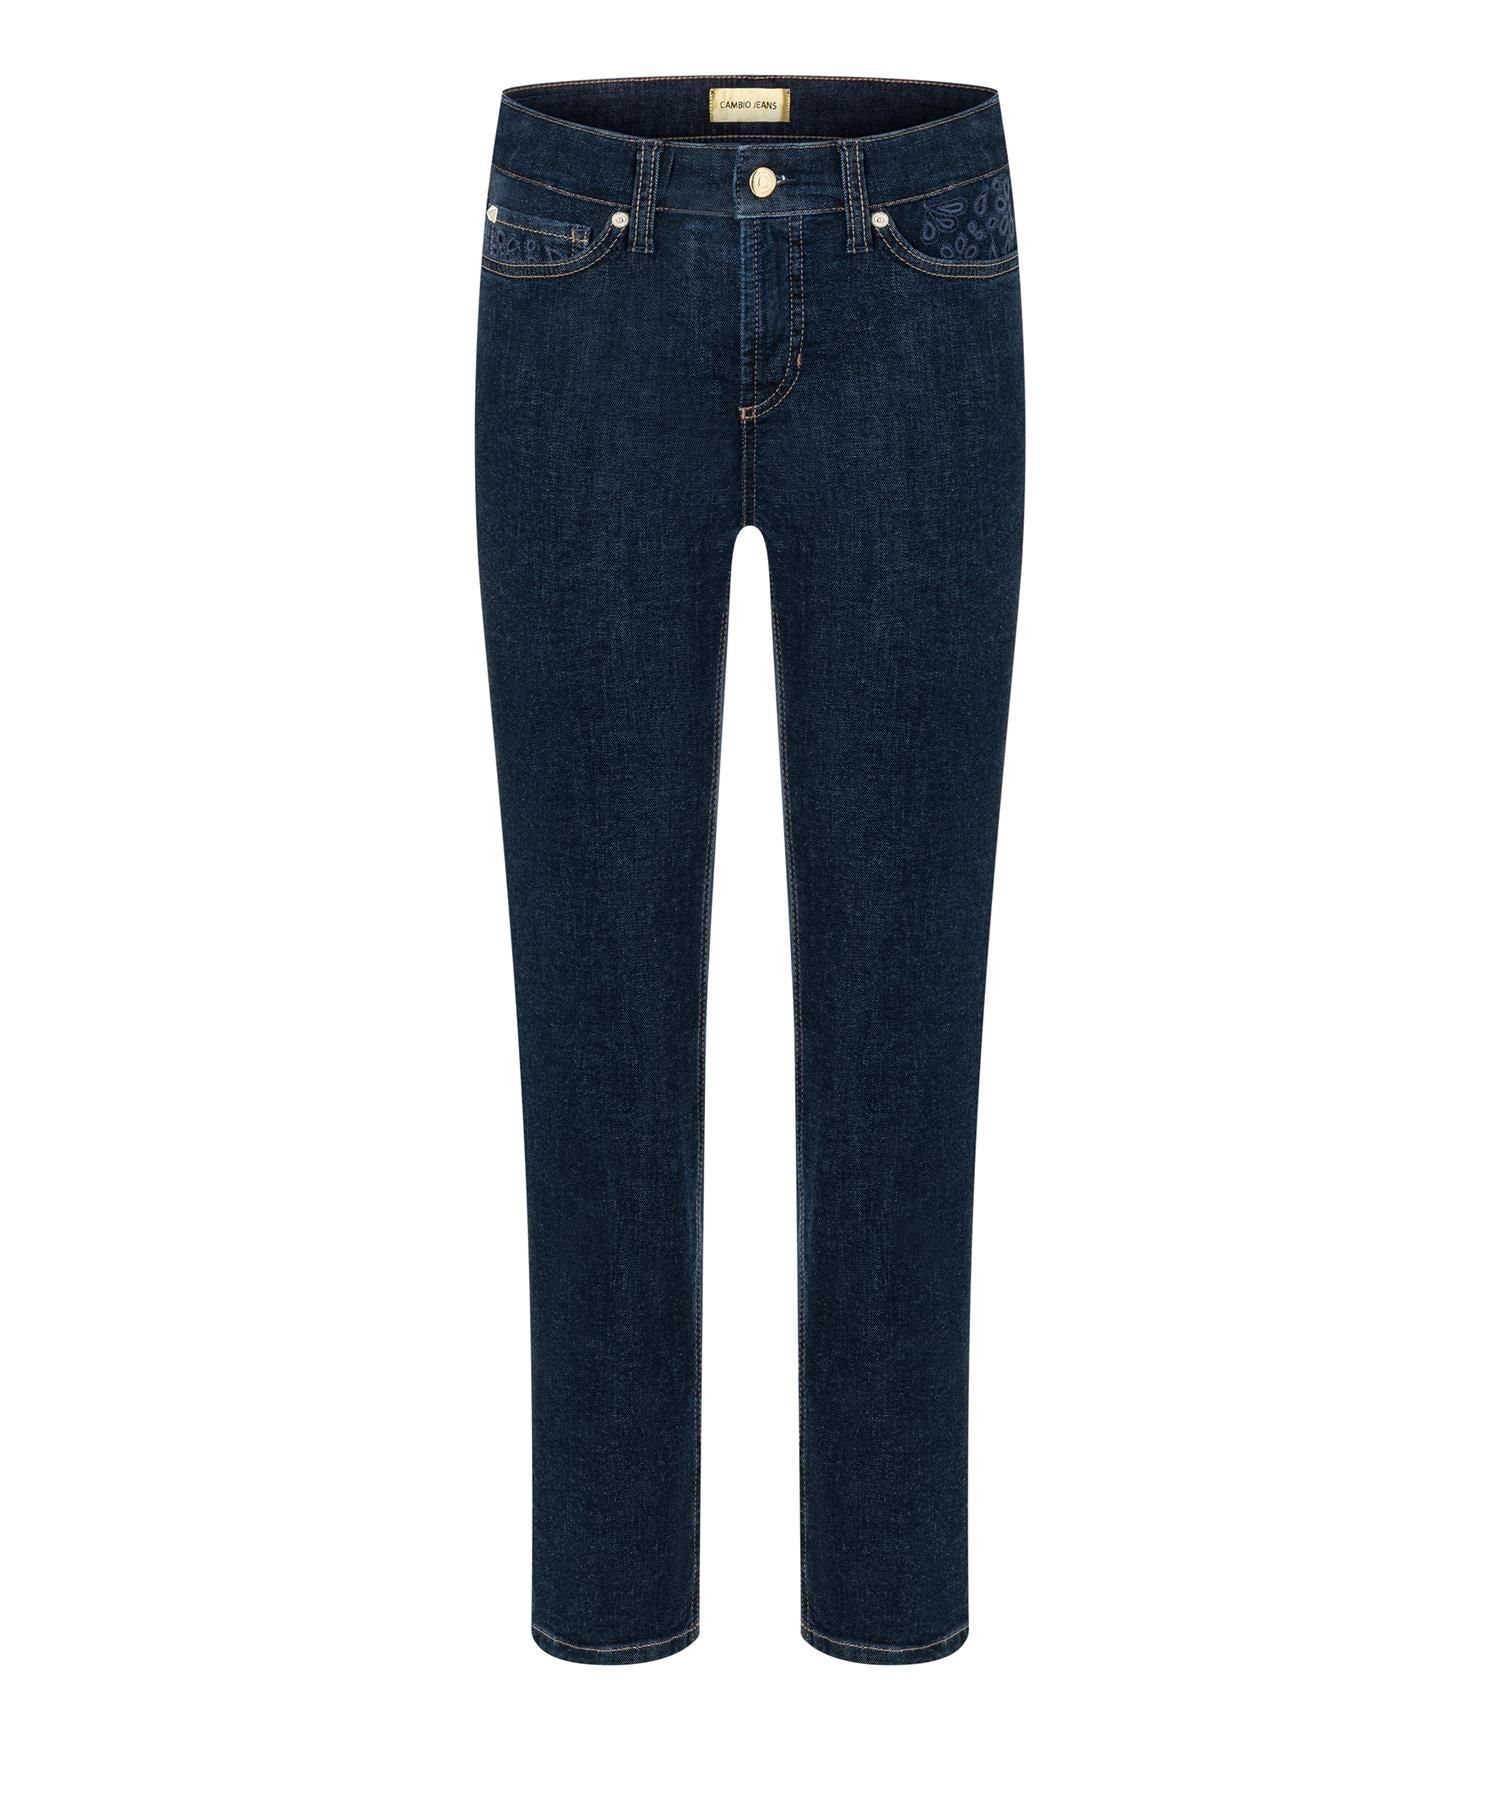 Piper cropped jeans dark stretch modern rinsed